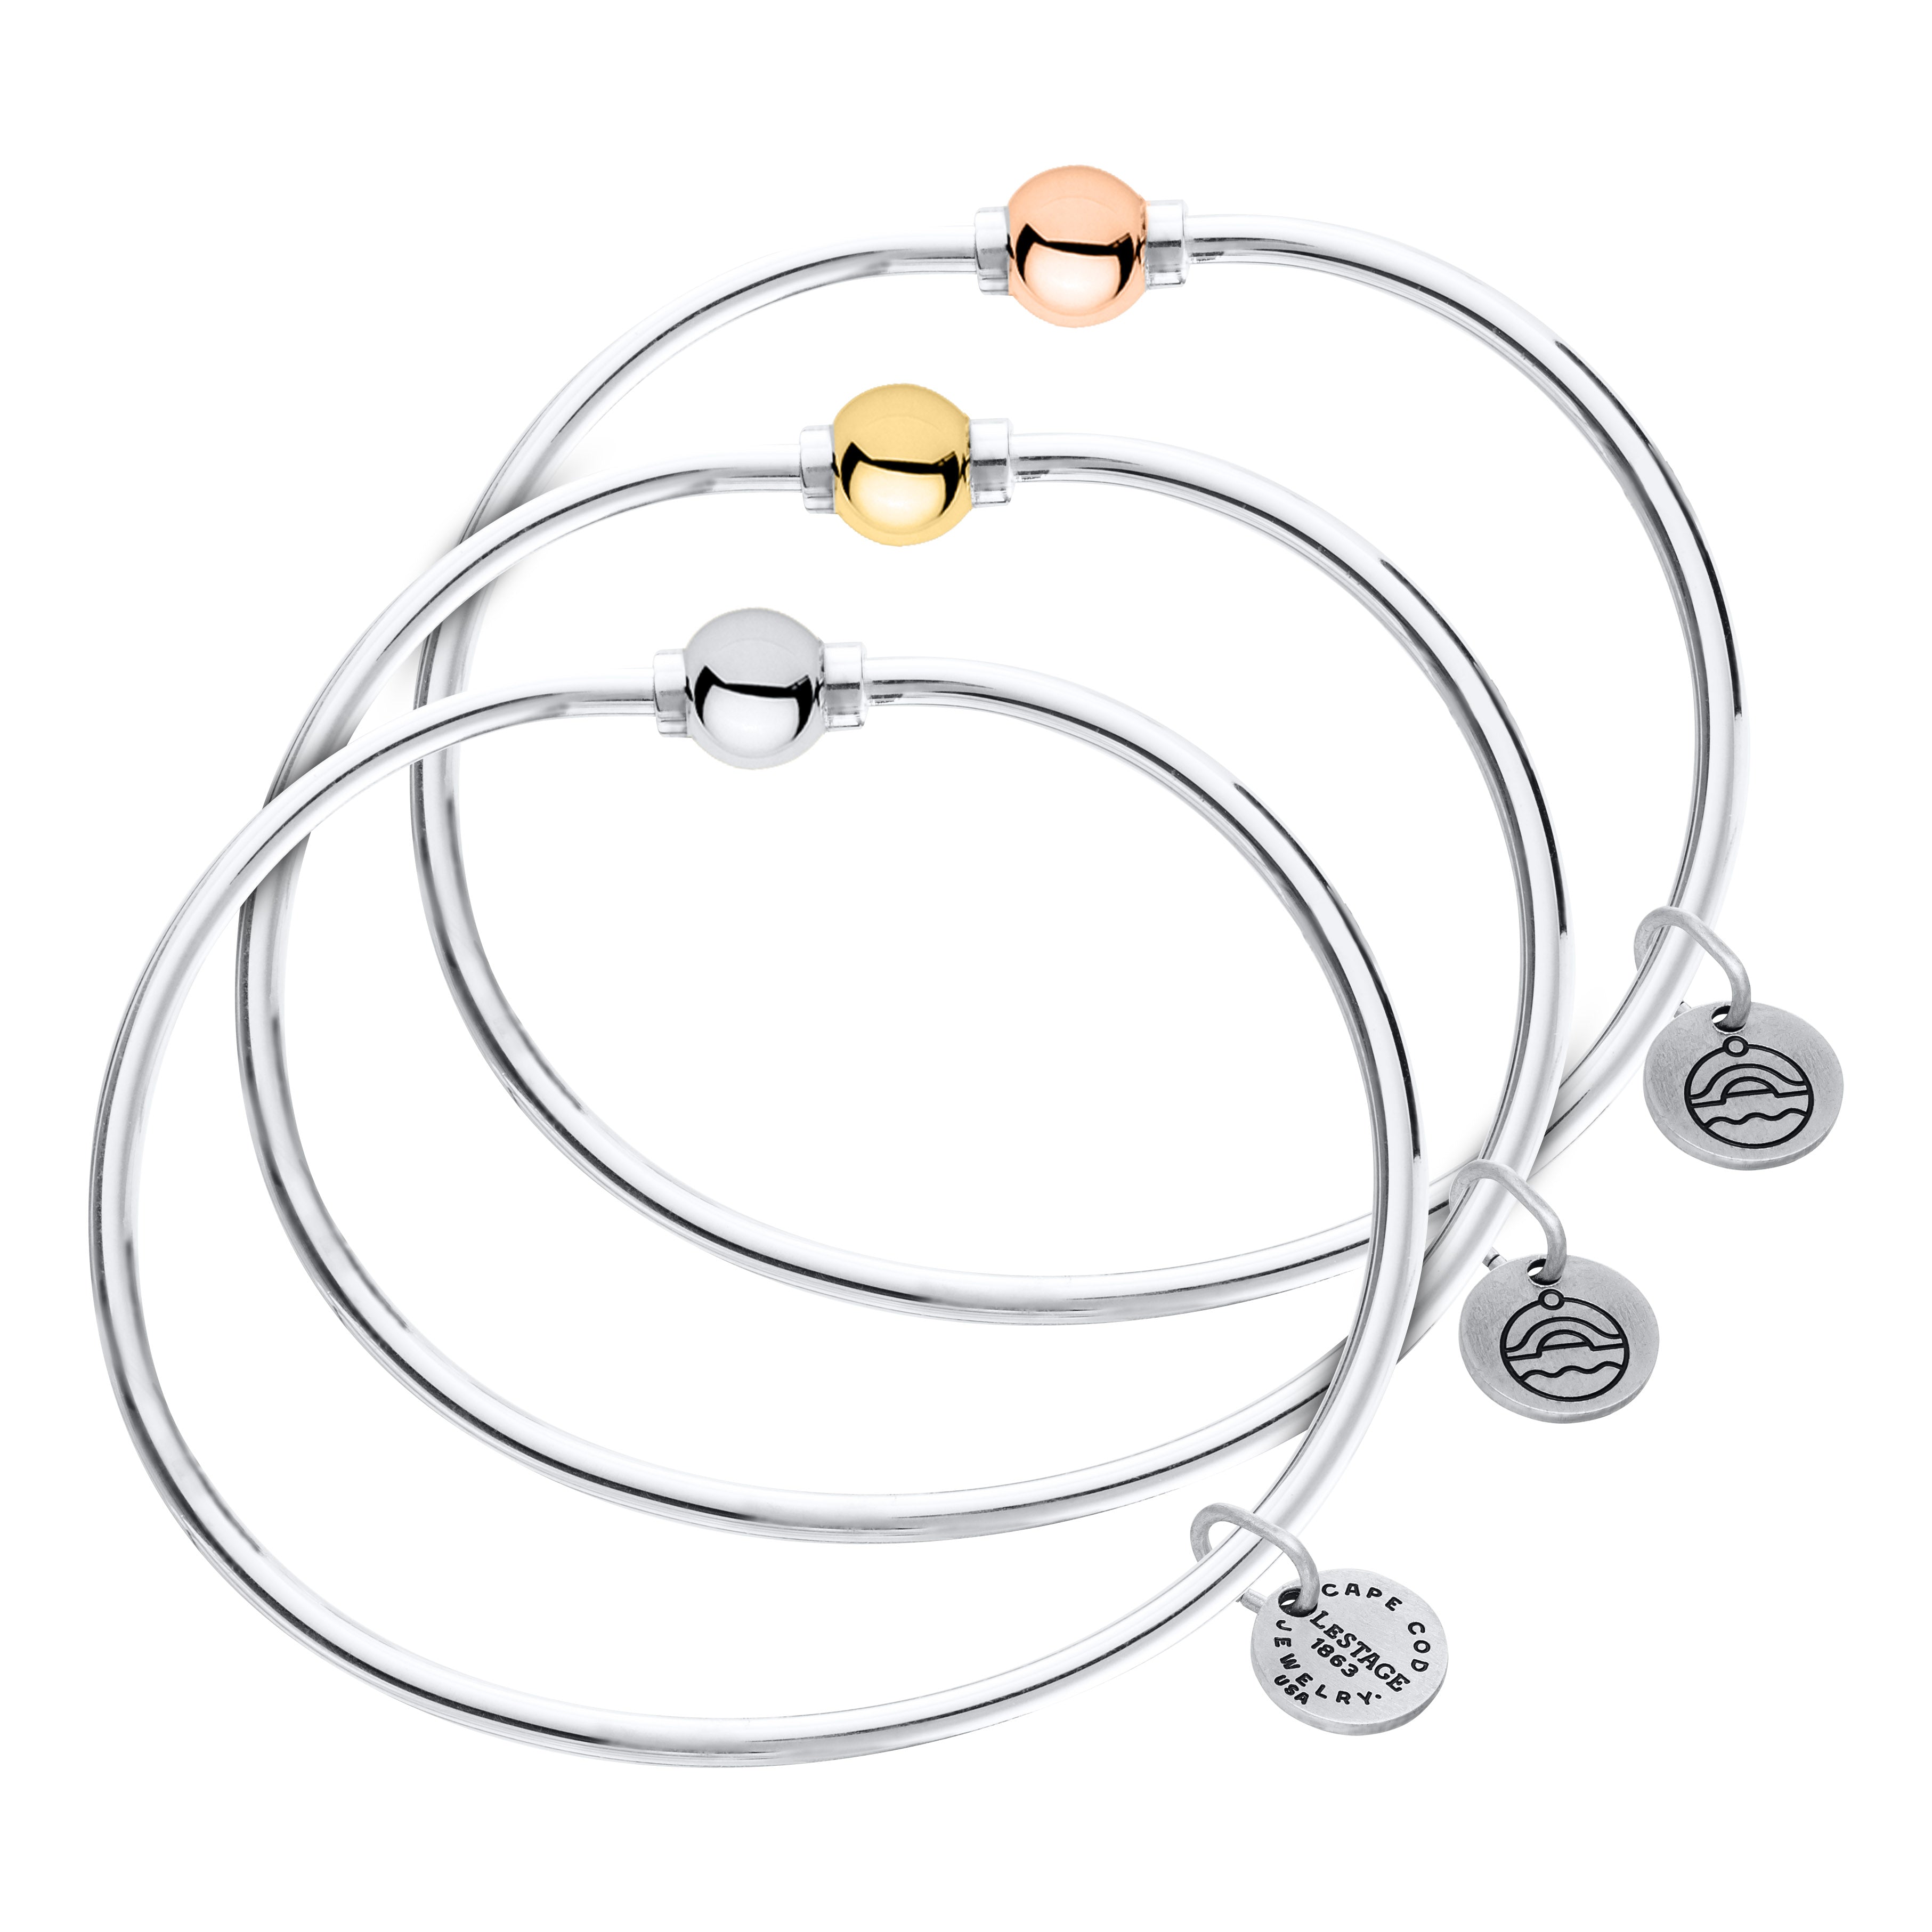 Scallop Shell Bracelet – Cape Cod Jewelers